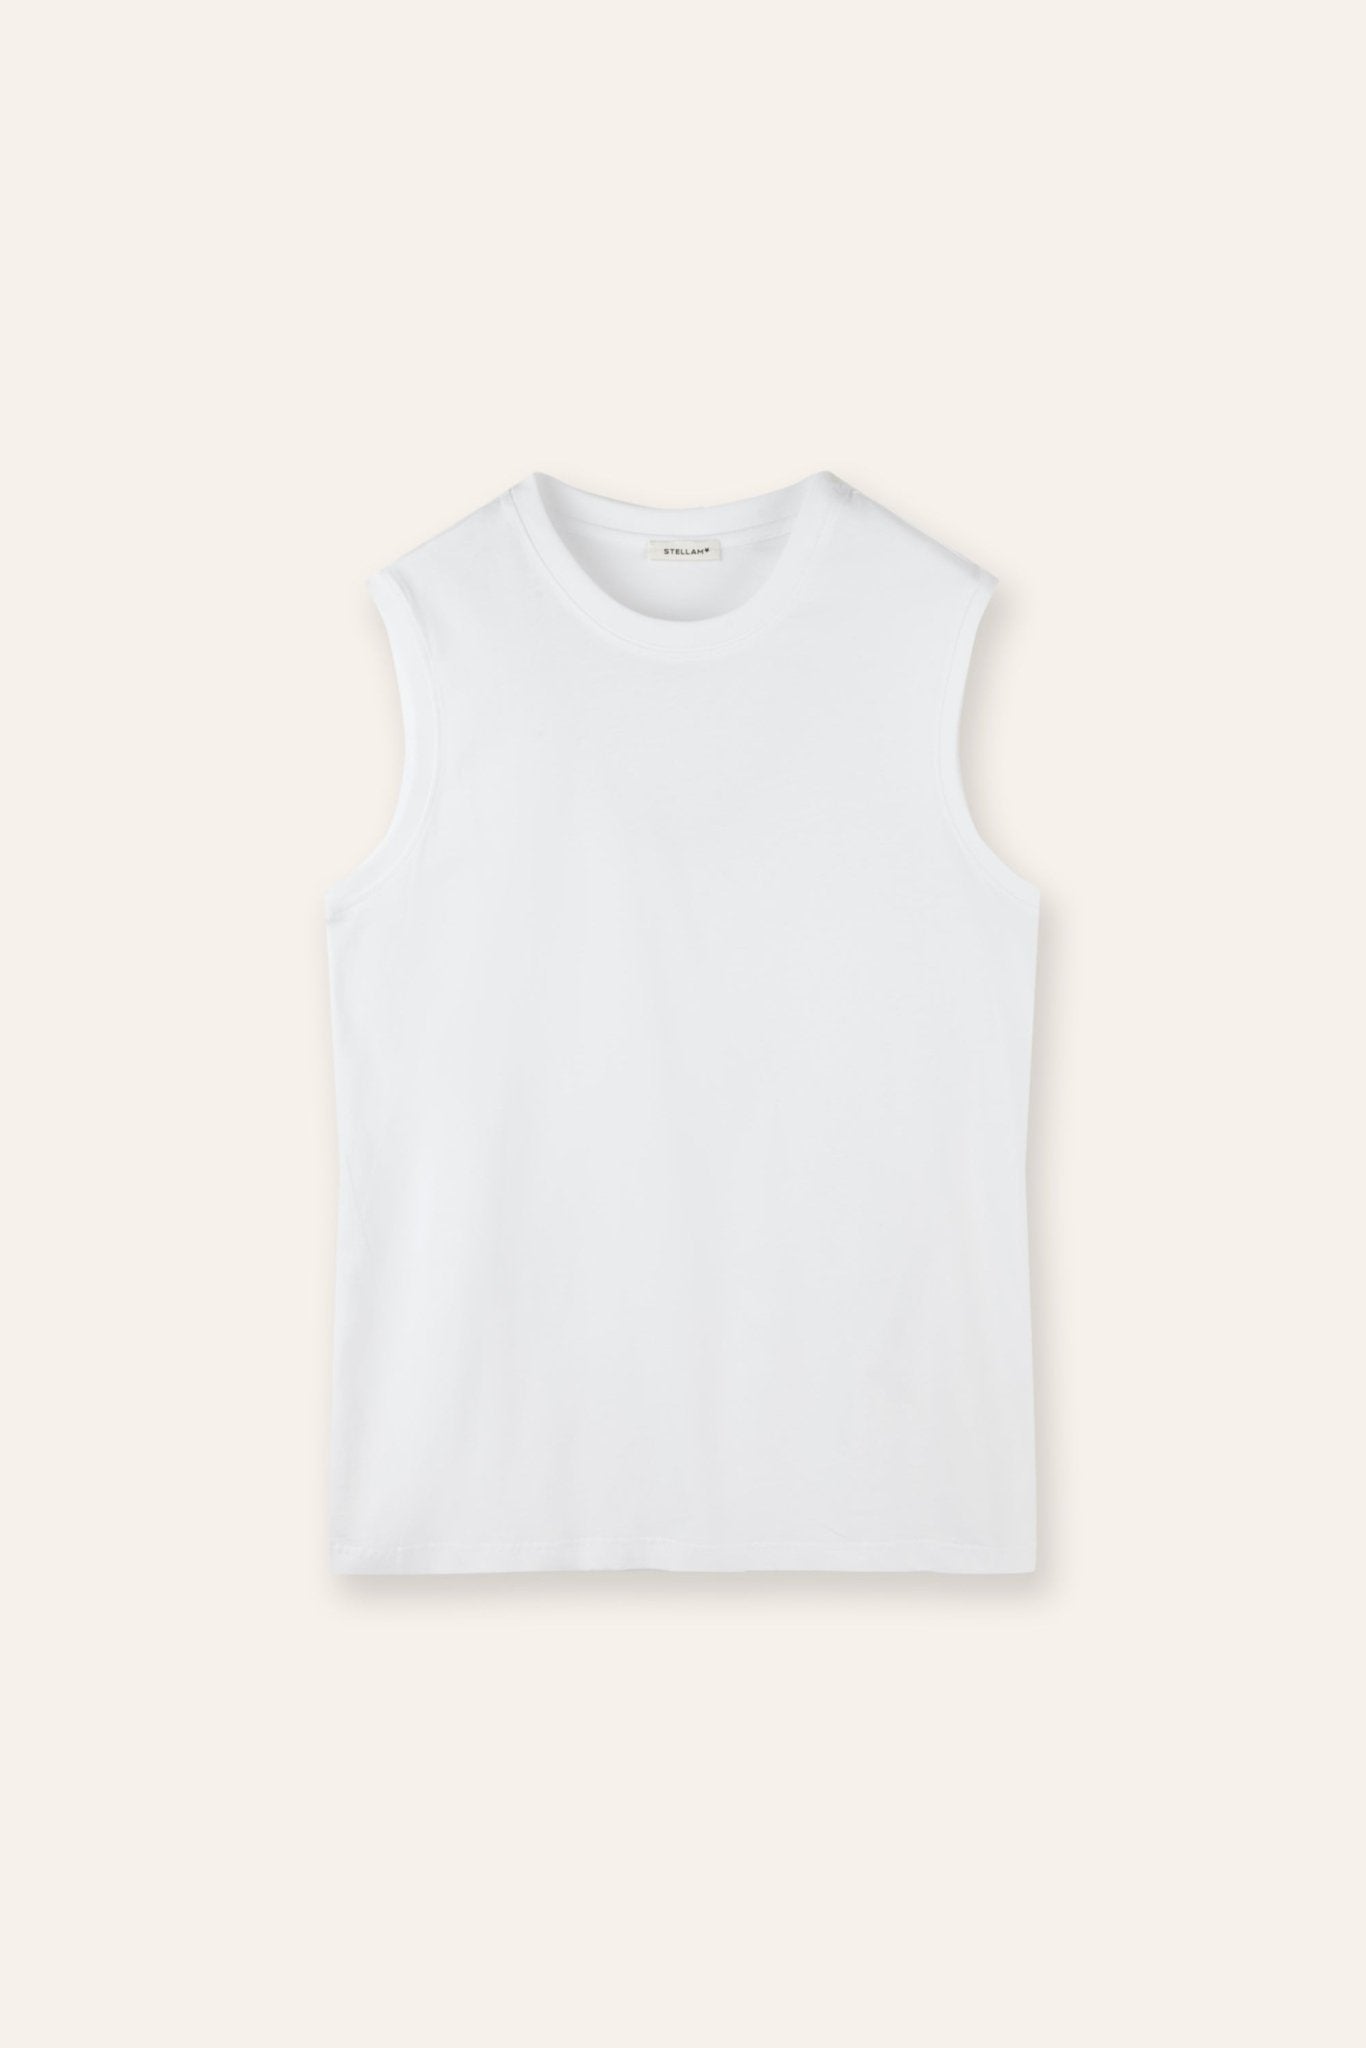 BY cotton sleeveless top (White) - STELLAM